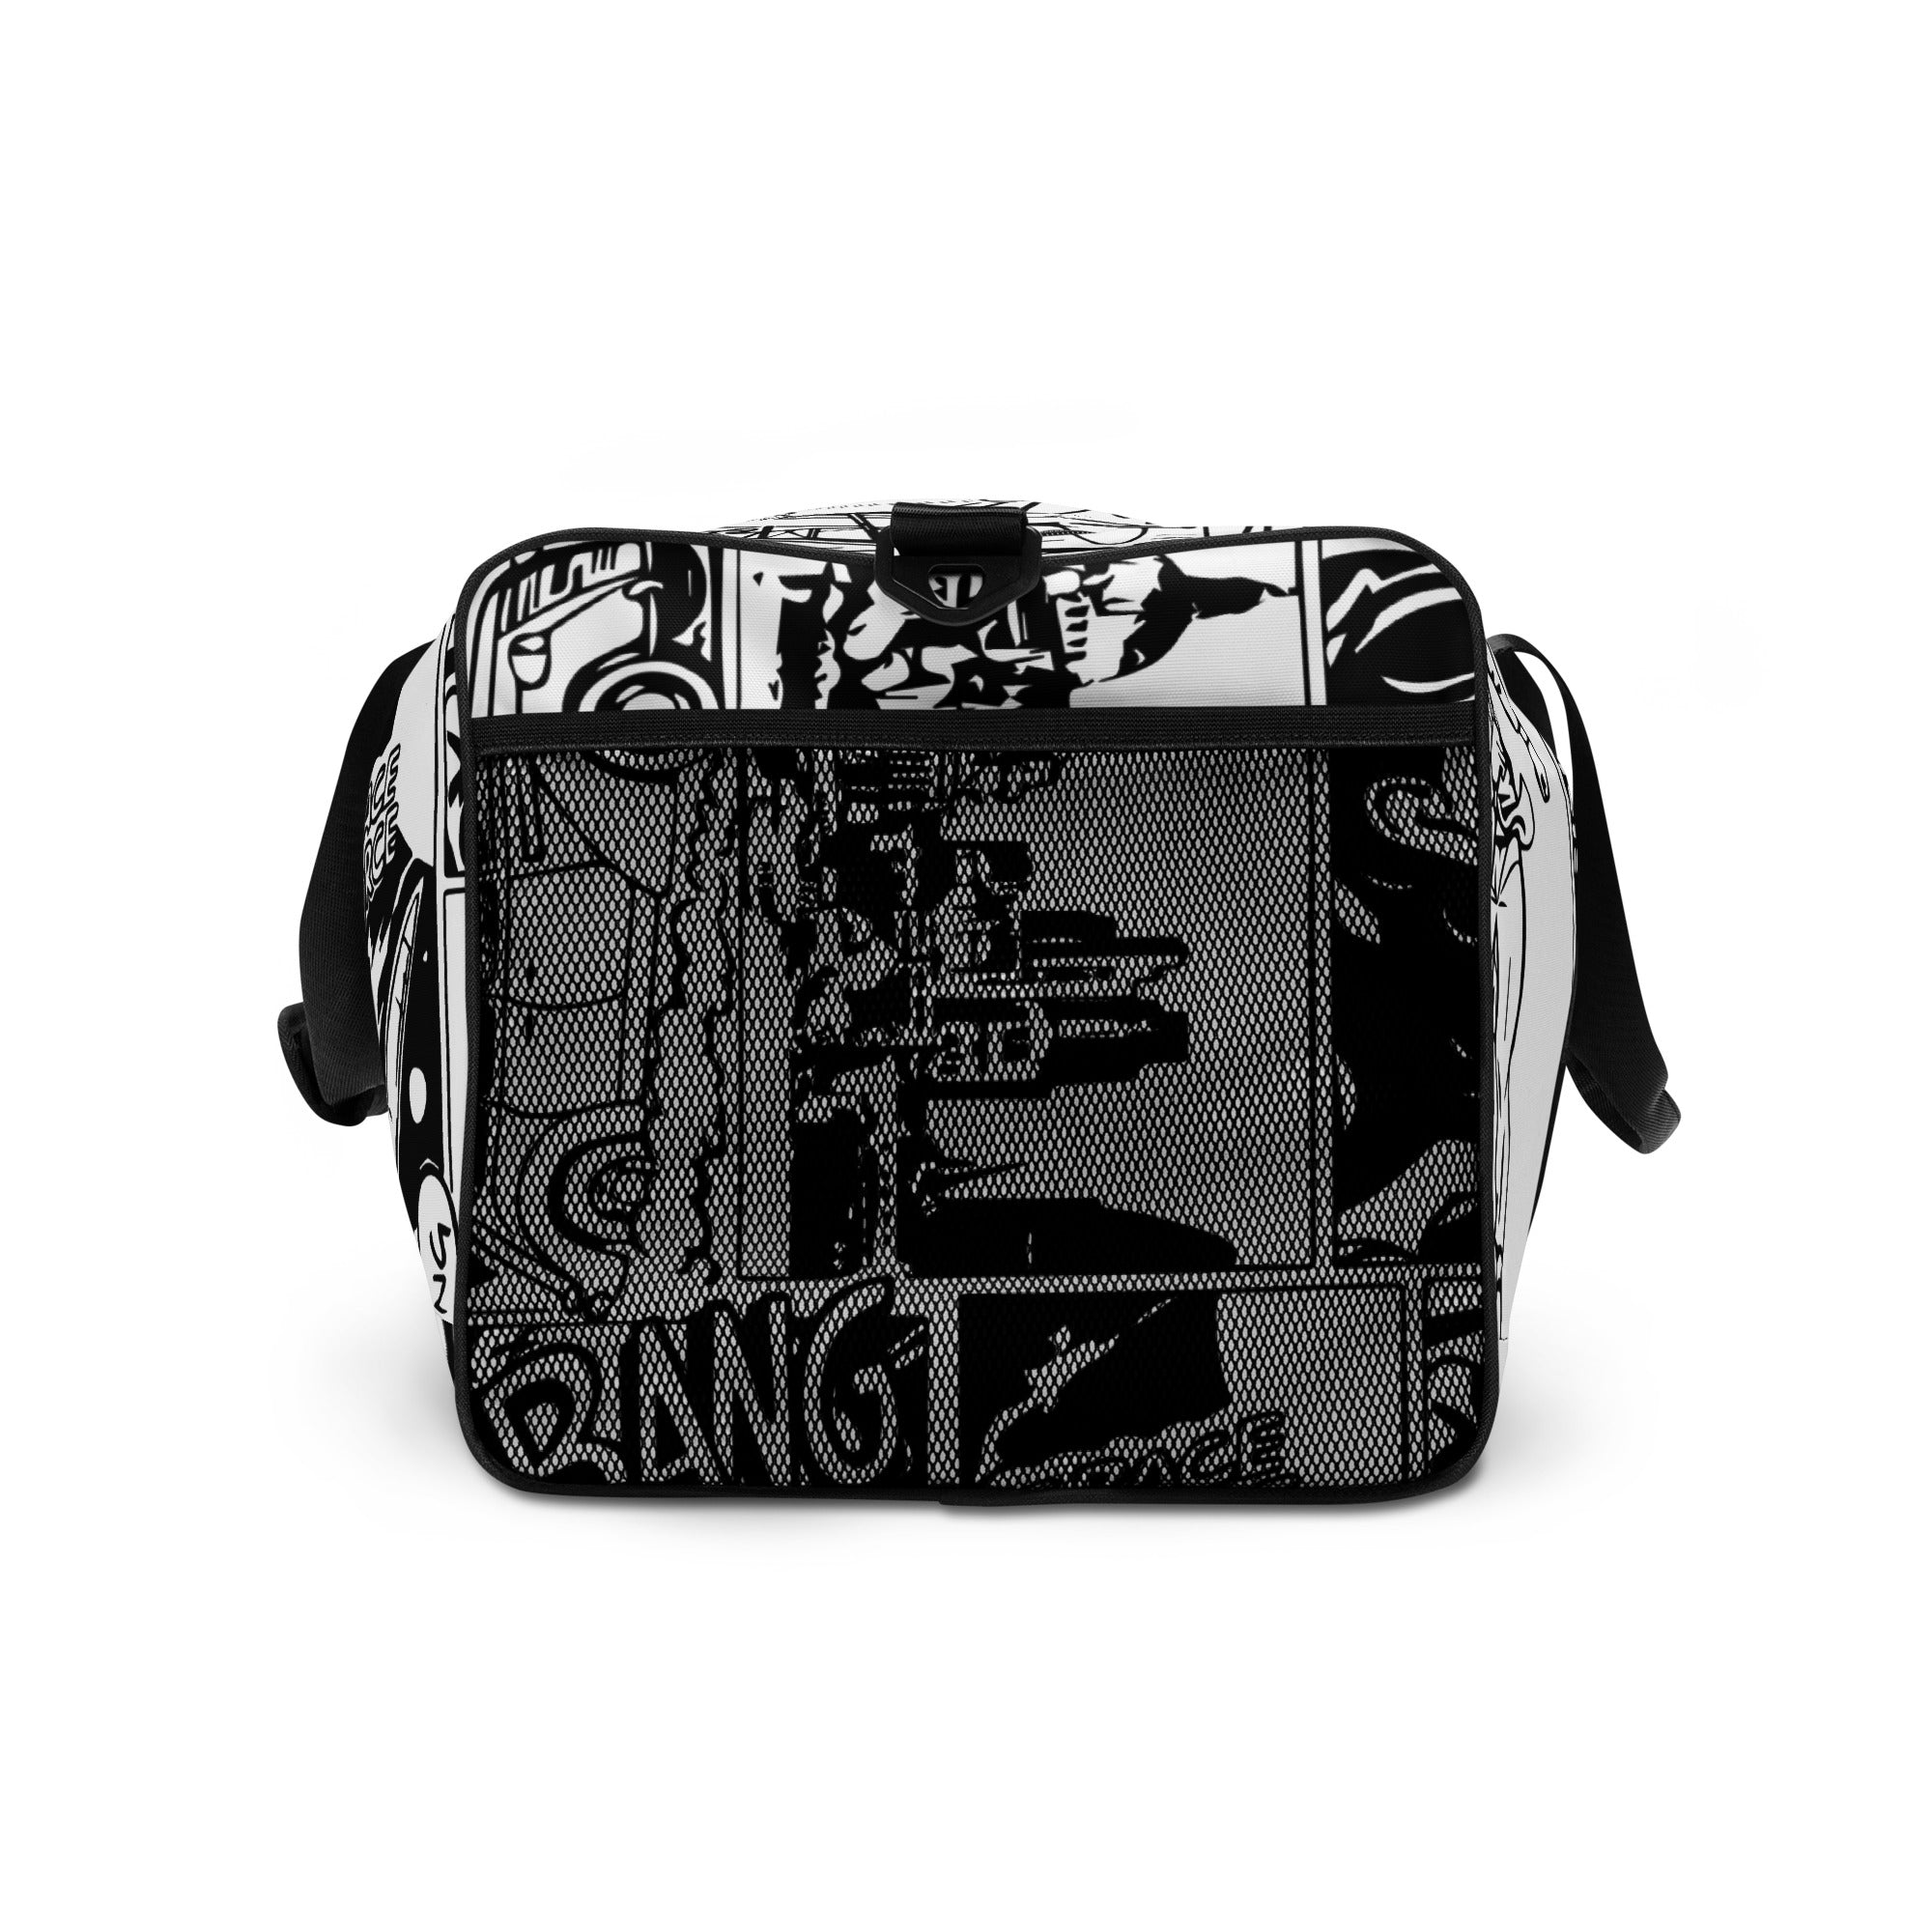 Black & White Comic Book Duffle Bag